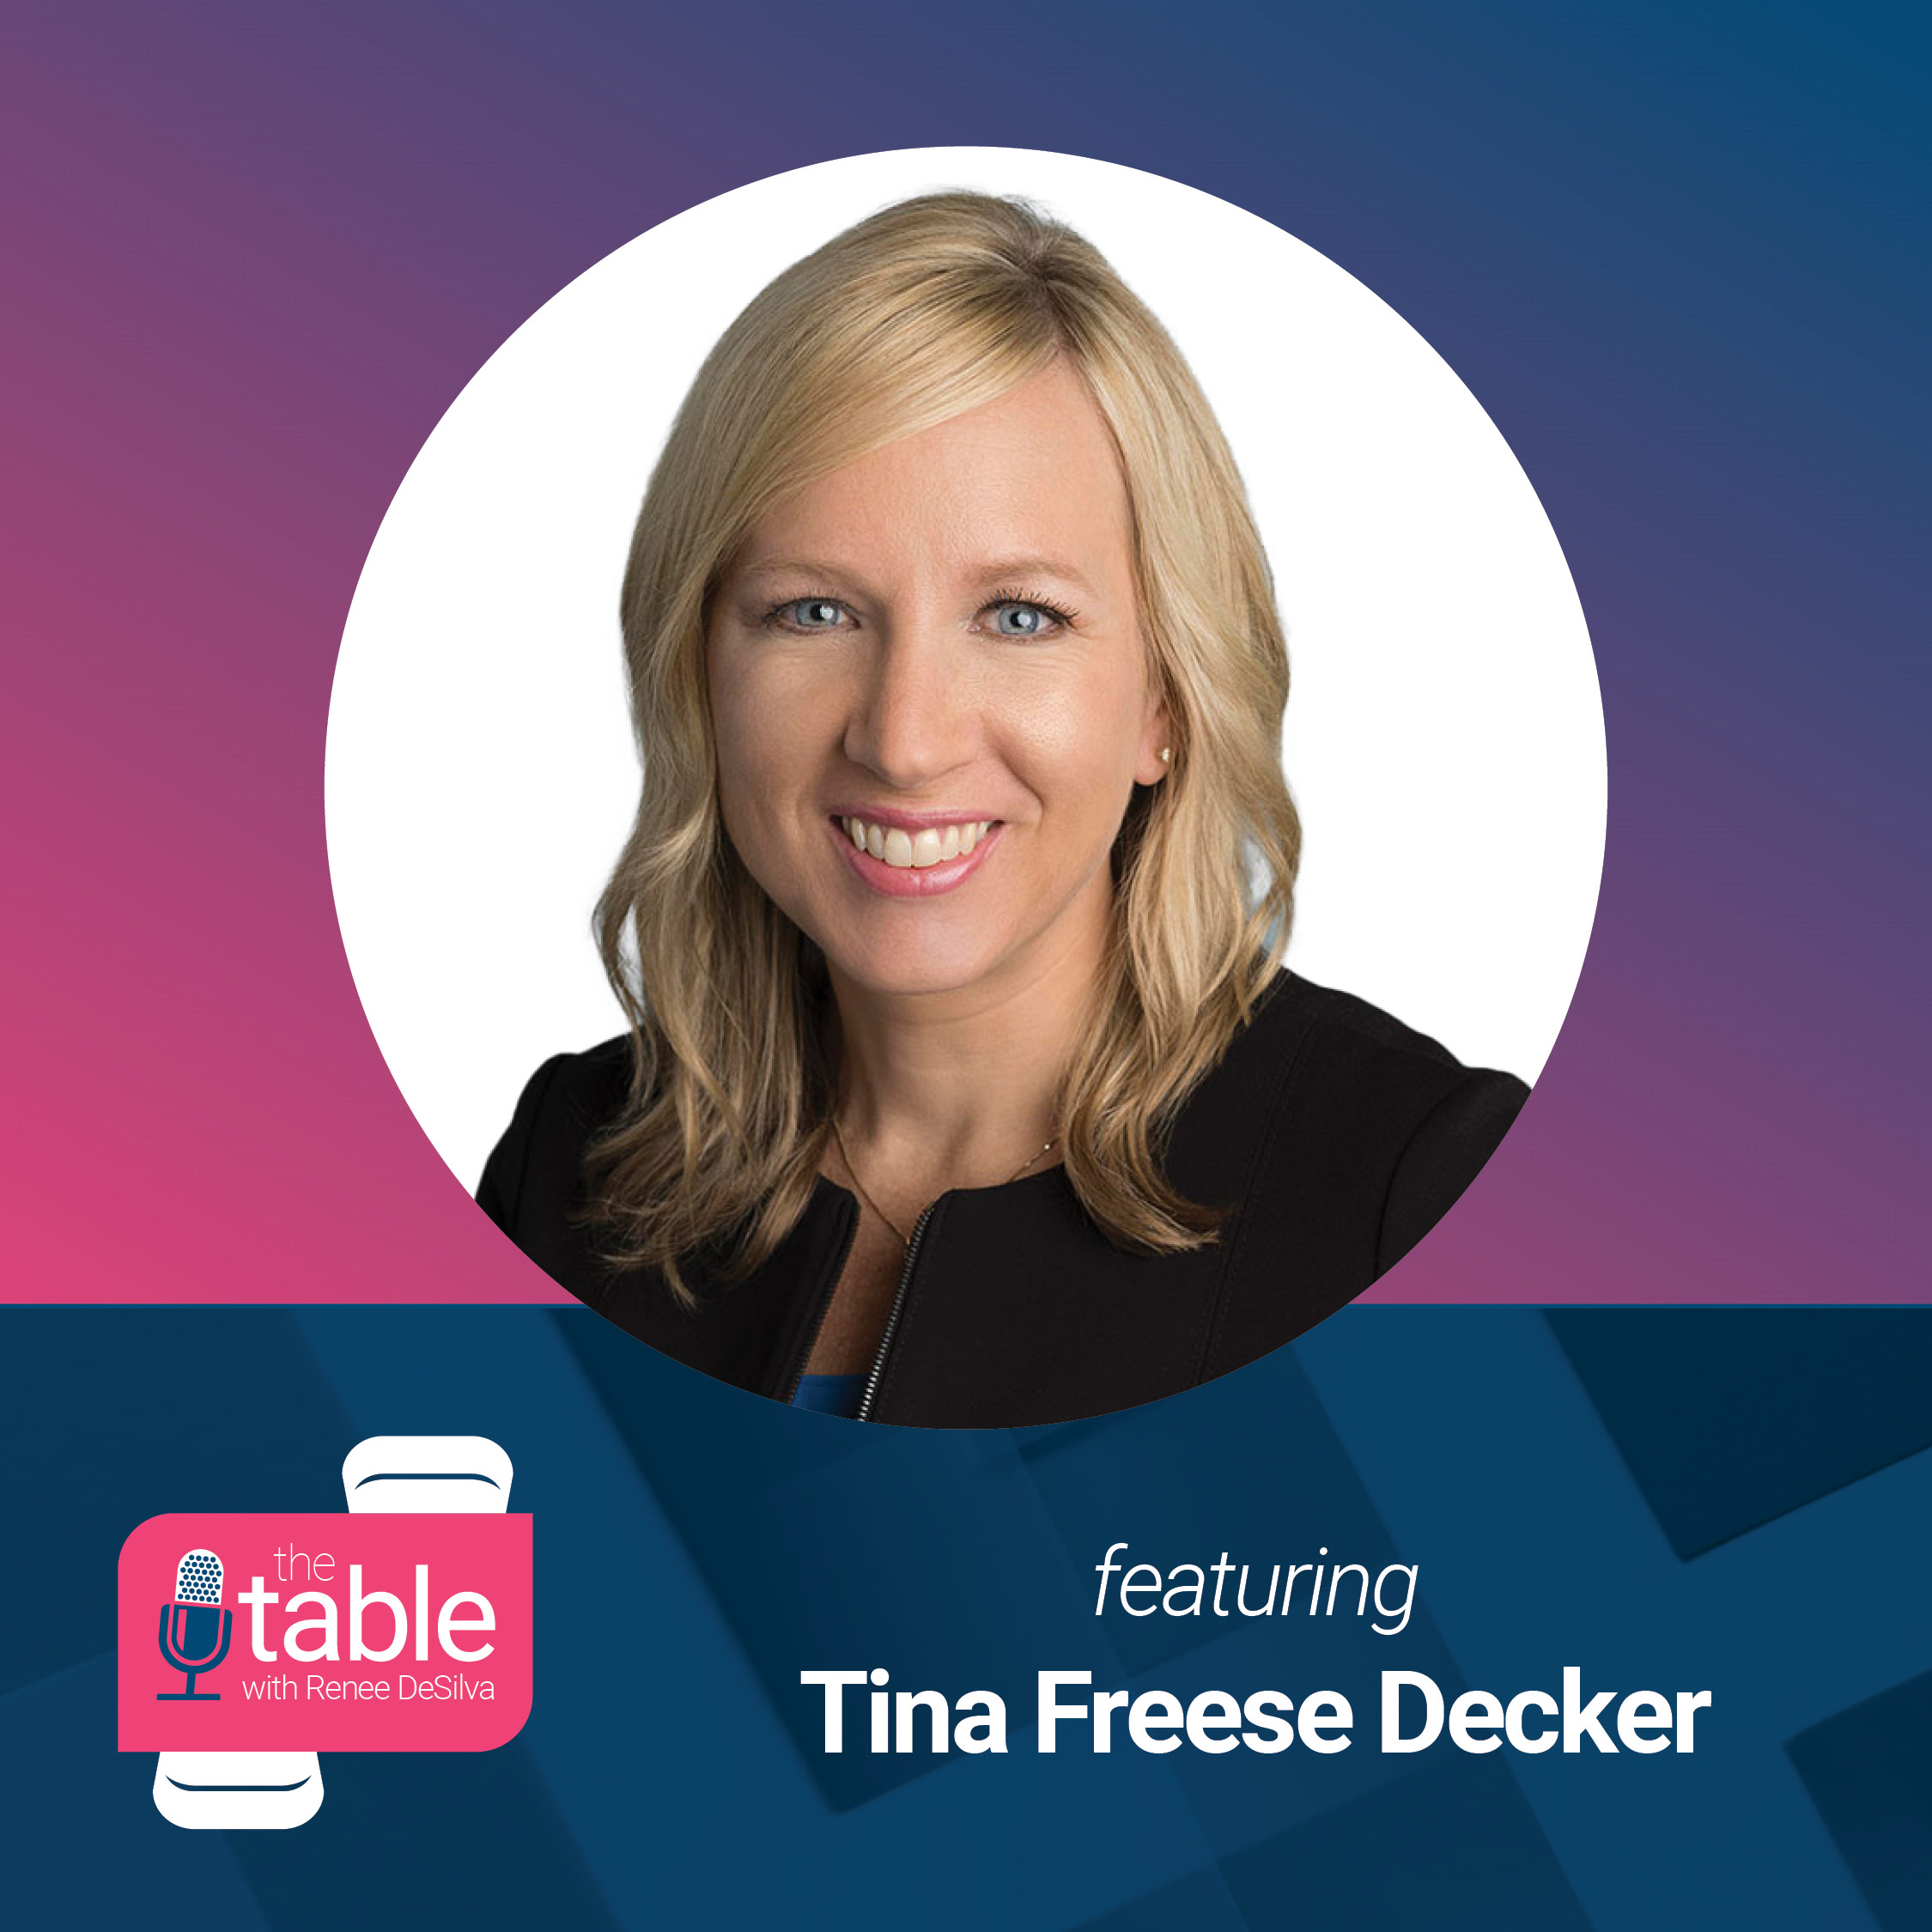 Tina Freese Decker